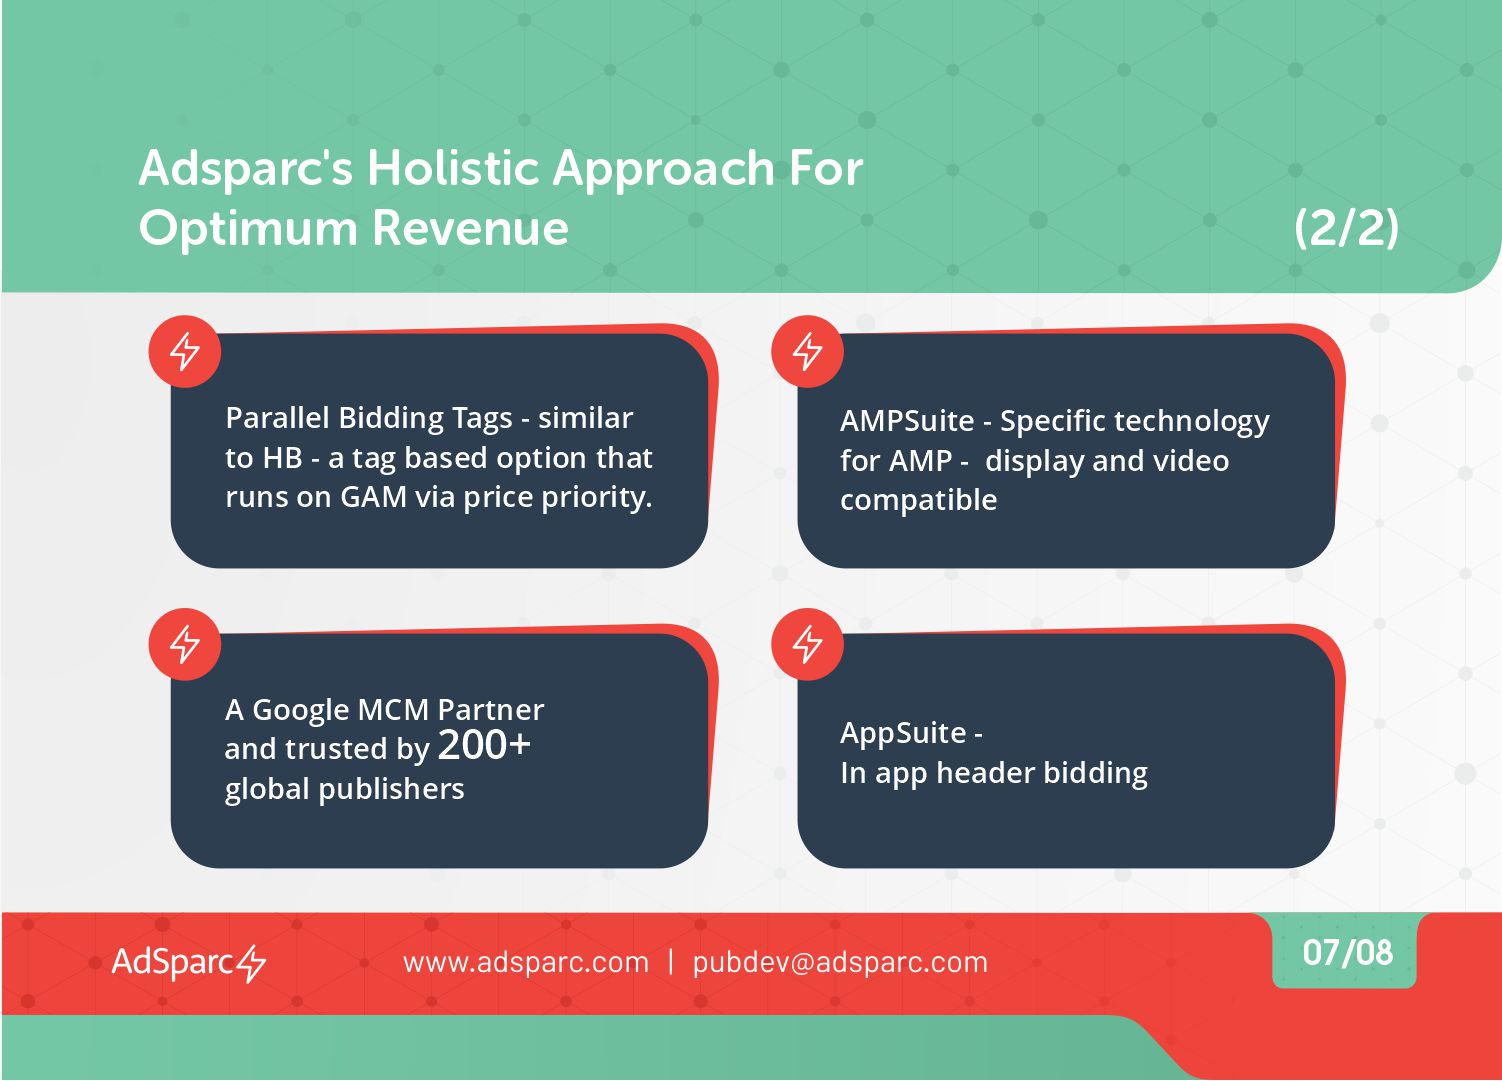 AdSparc Holistic Approach for Optimum Revenue - 2